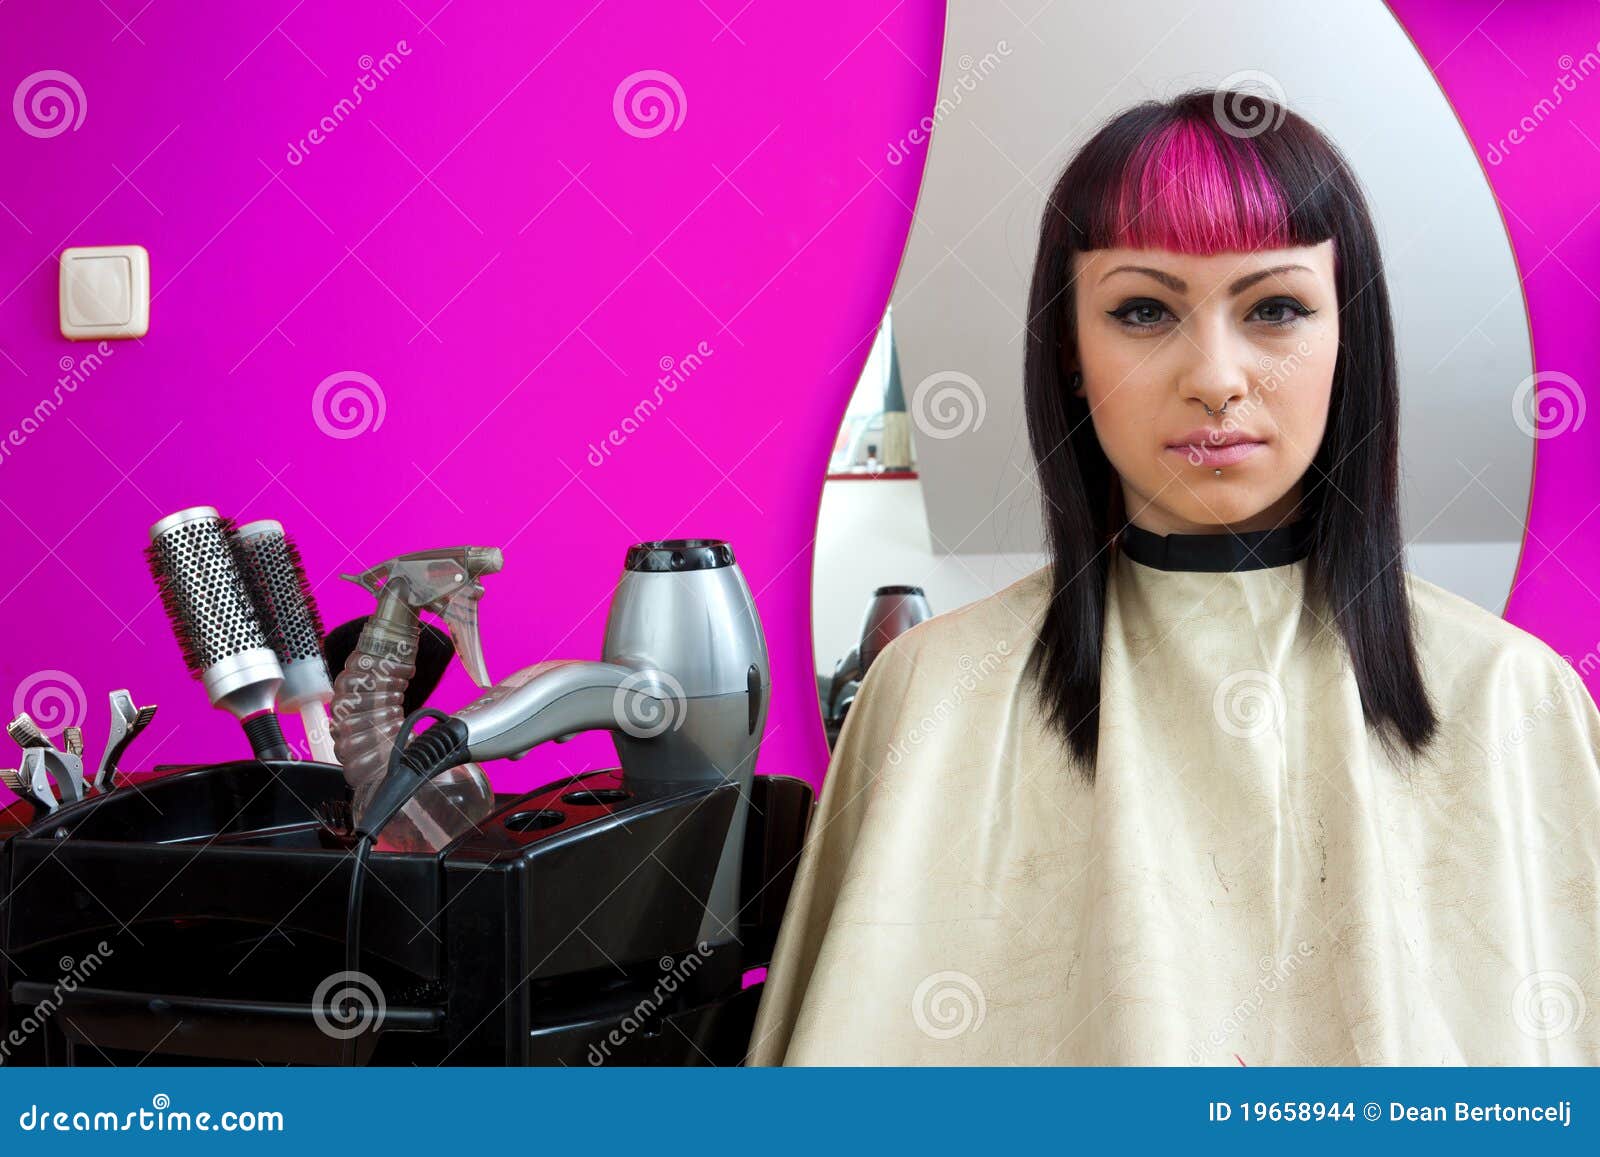 Interesting Looking Teen Girl in Hair Salon Stock Photo - Image of cool,  elegance: 19658944